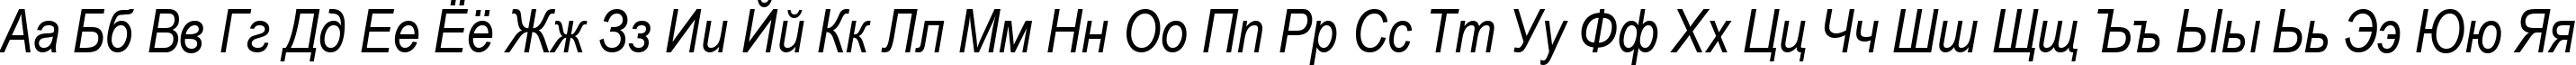 Пример написания русского алфавита шрифтом Ariac  Italic